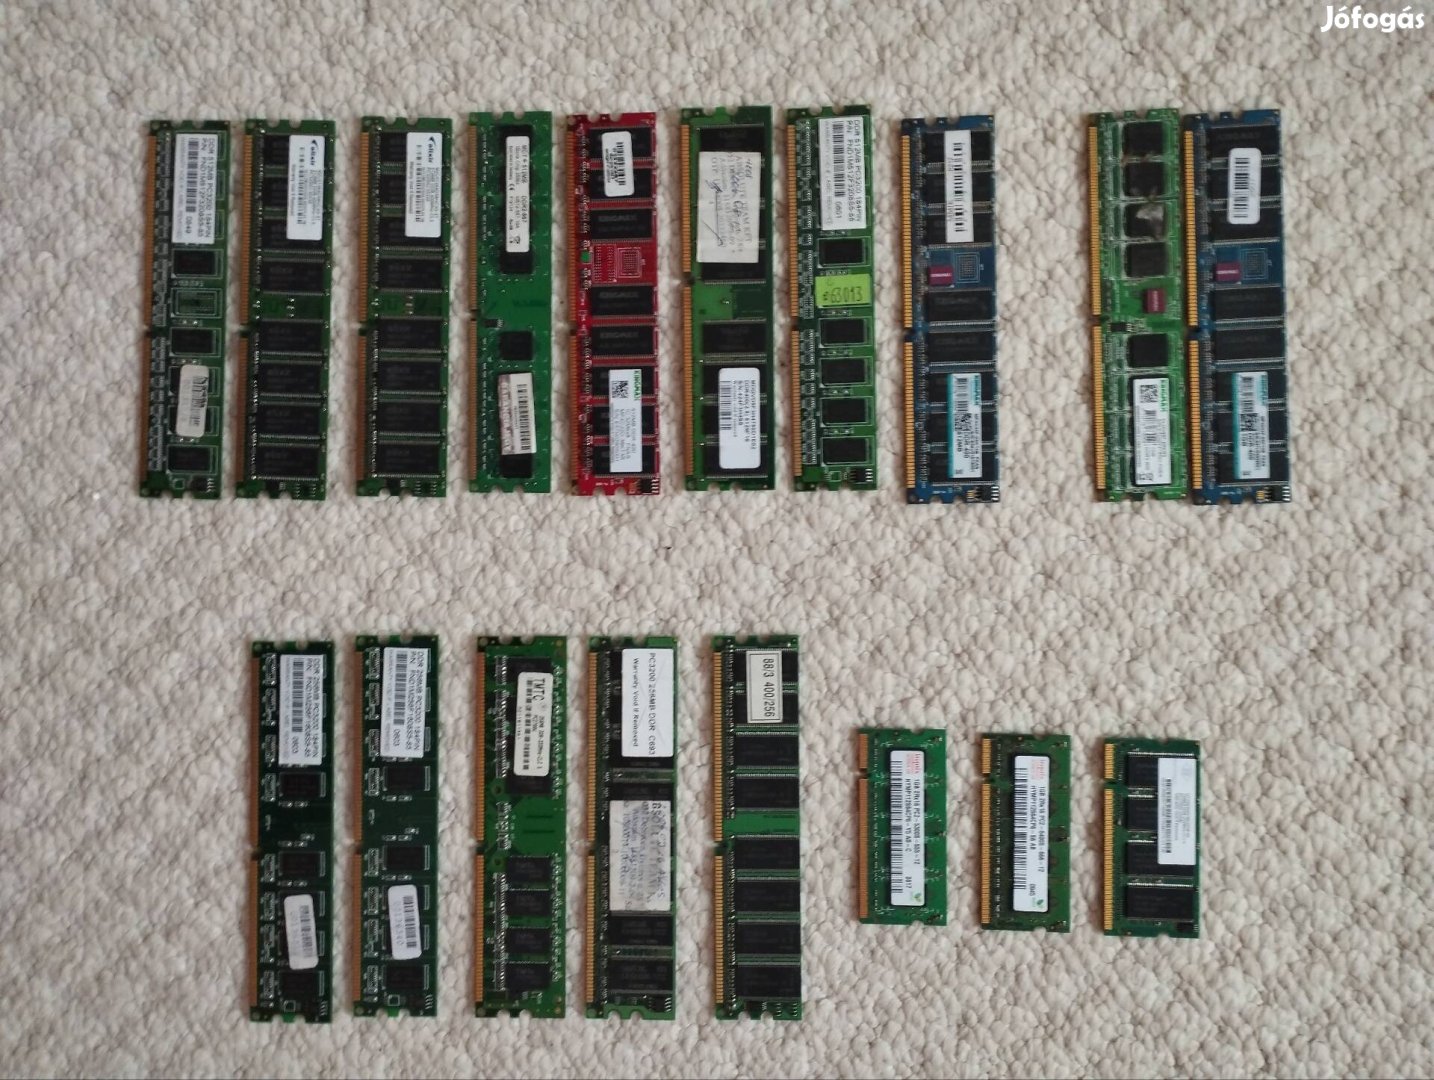 18 db memória (256MB-1GB; DDR1-DDR2) teszteletlenek